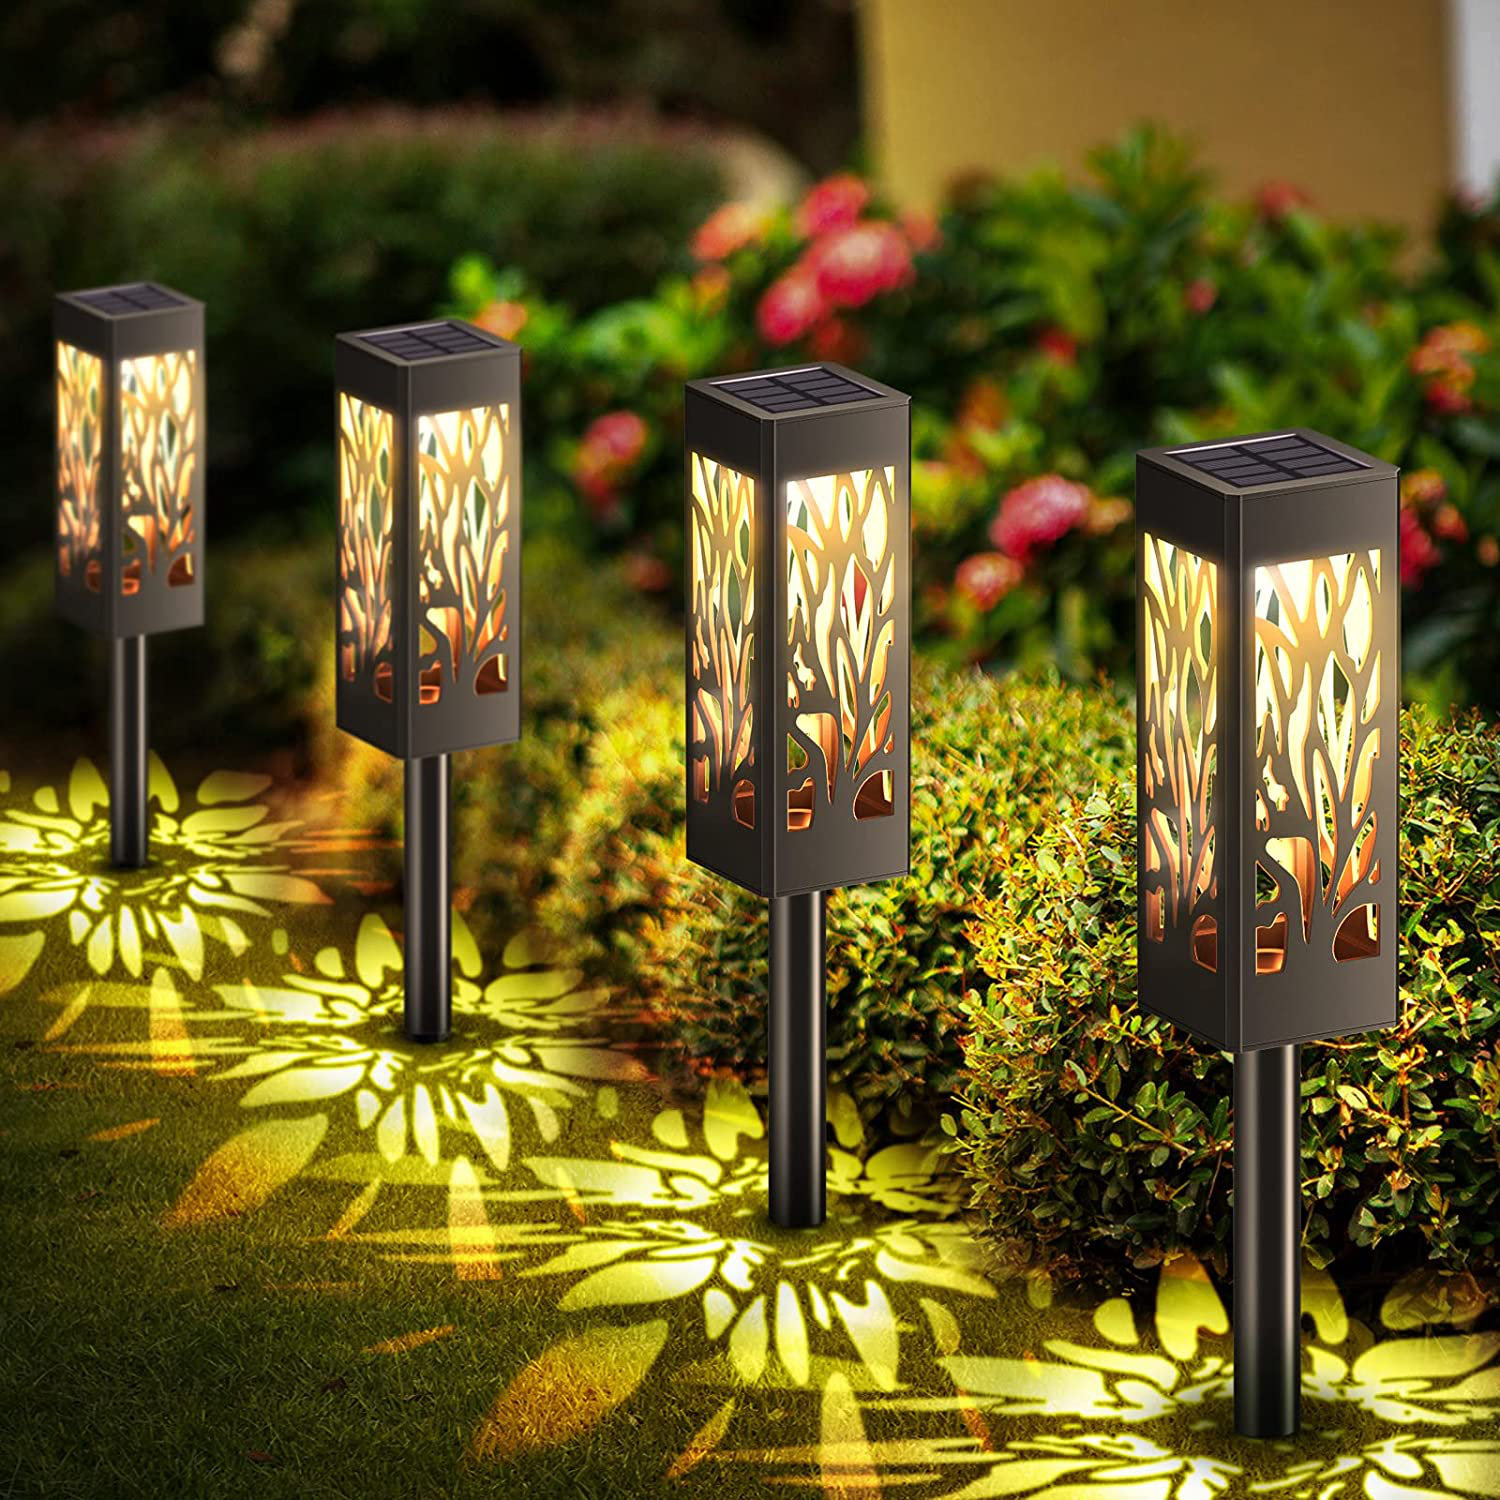 Bright LED solar lamp - . Gift Ideas